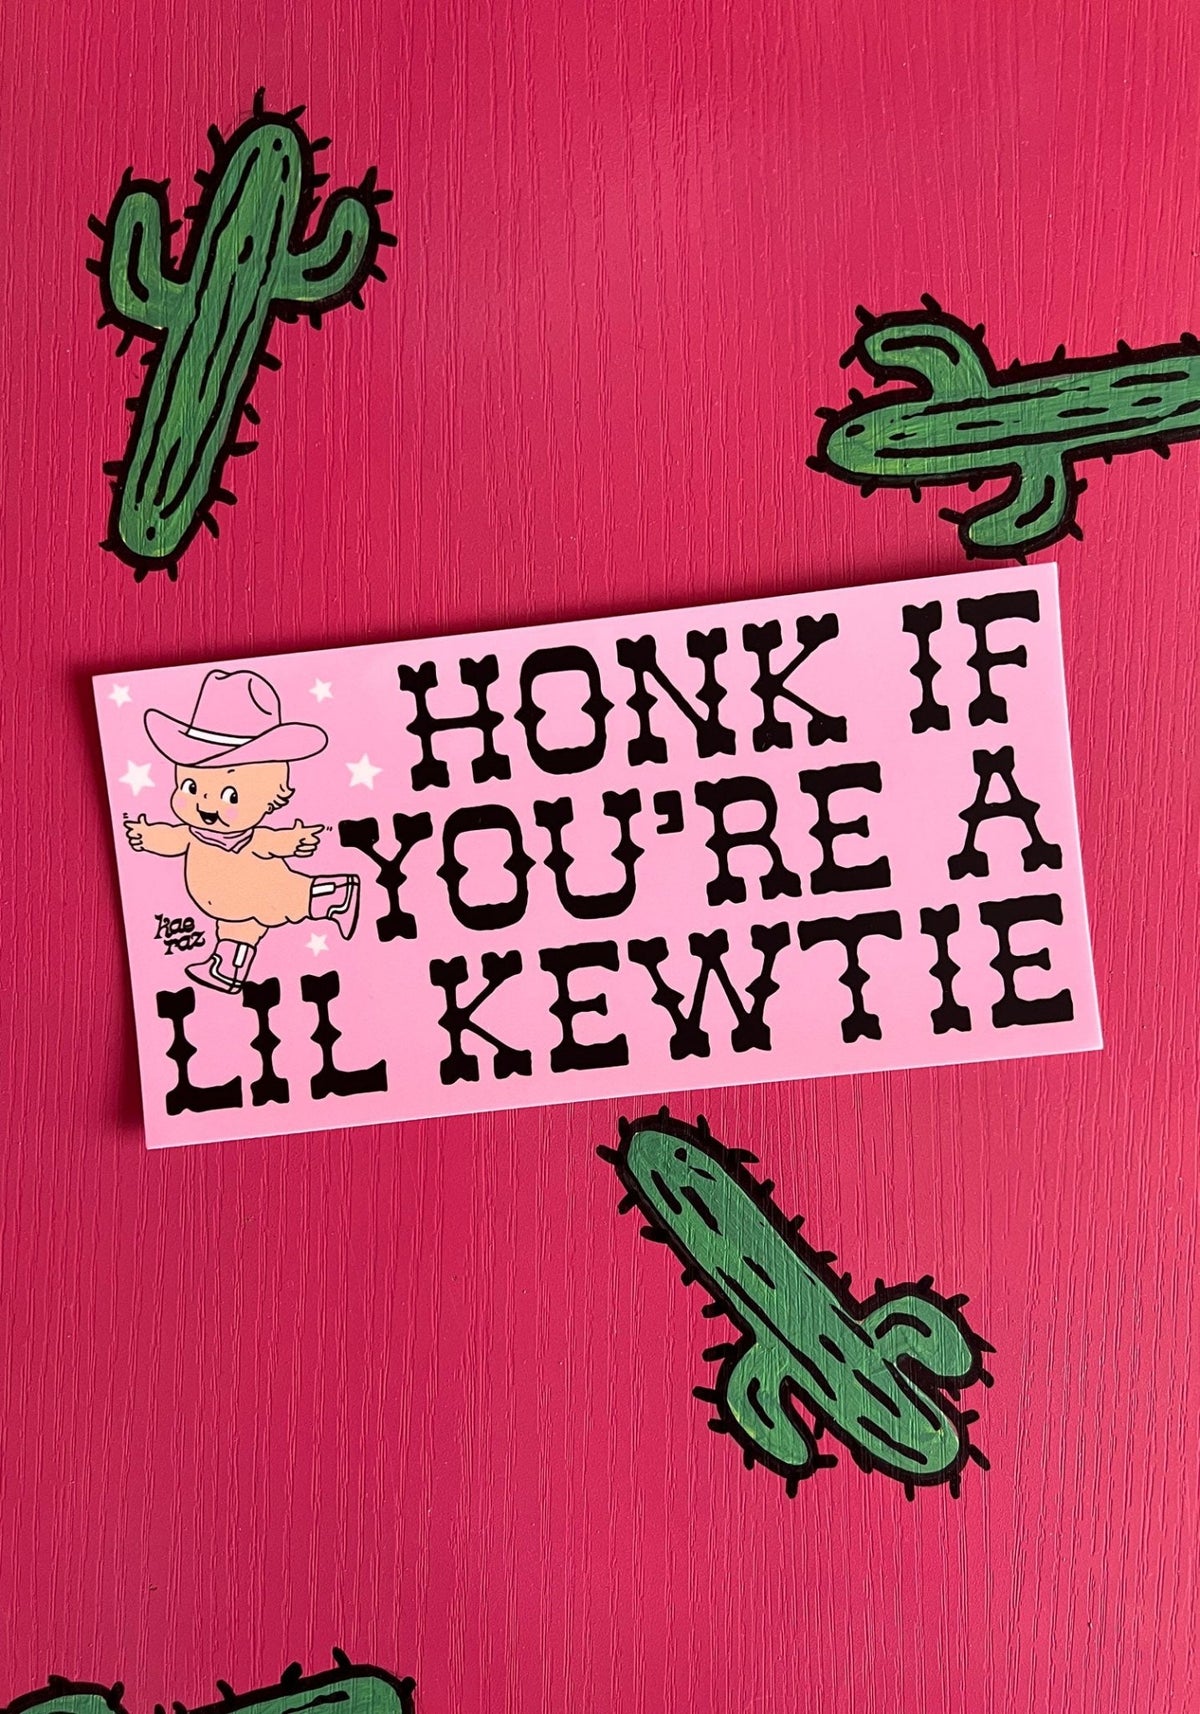 Cowpoke Kewtie Bumper Sticker by kaeraz baby cowboy cowboy boots